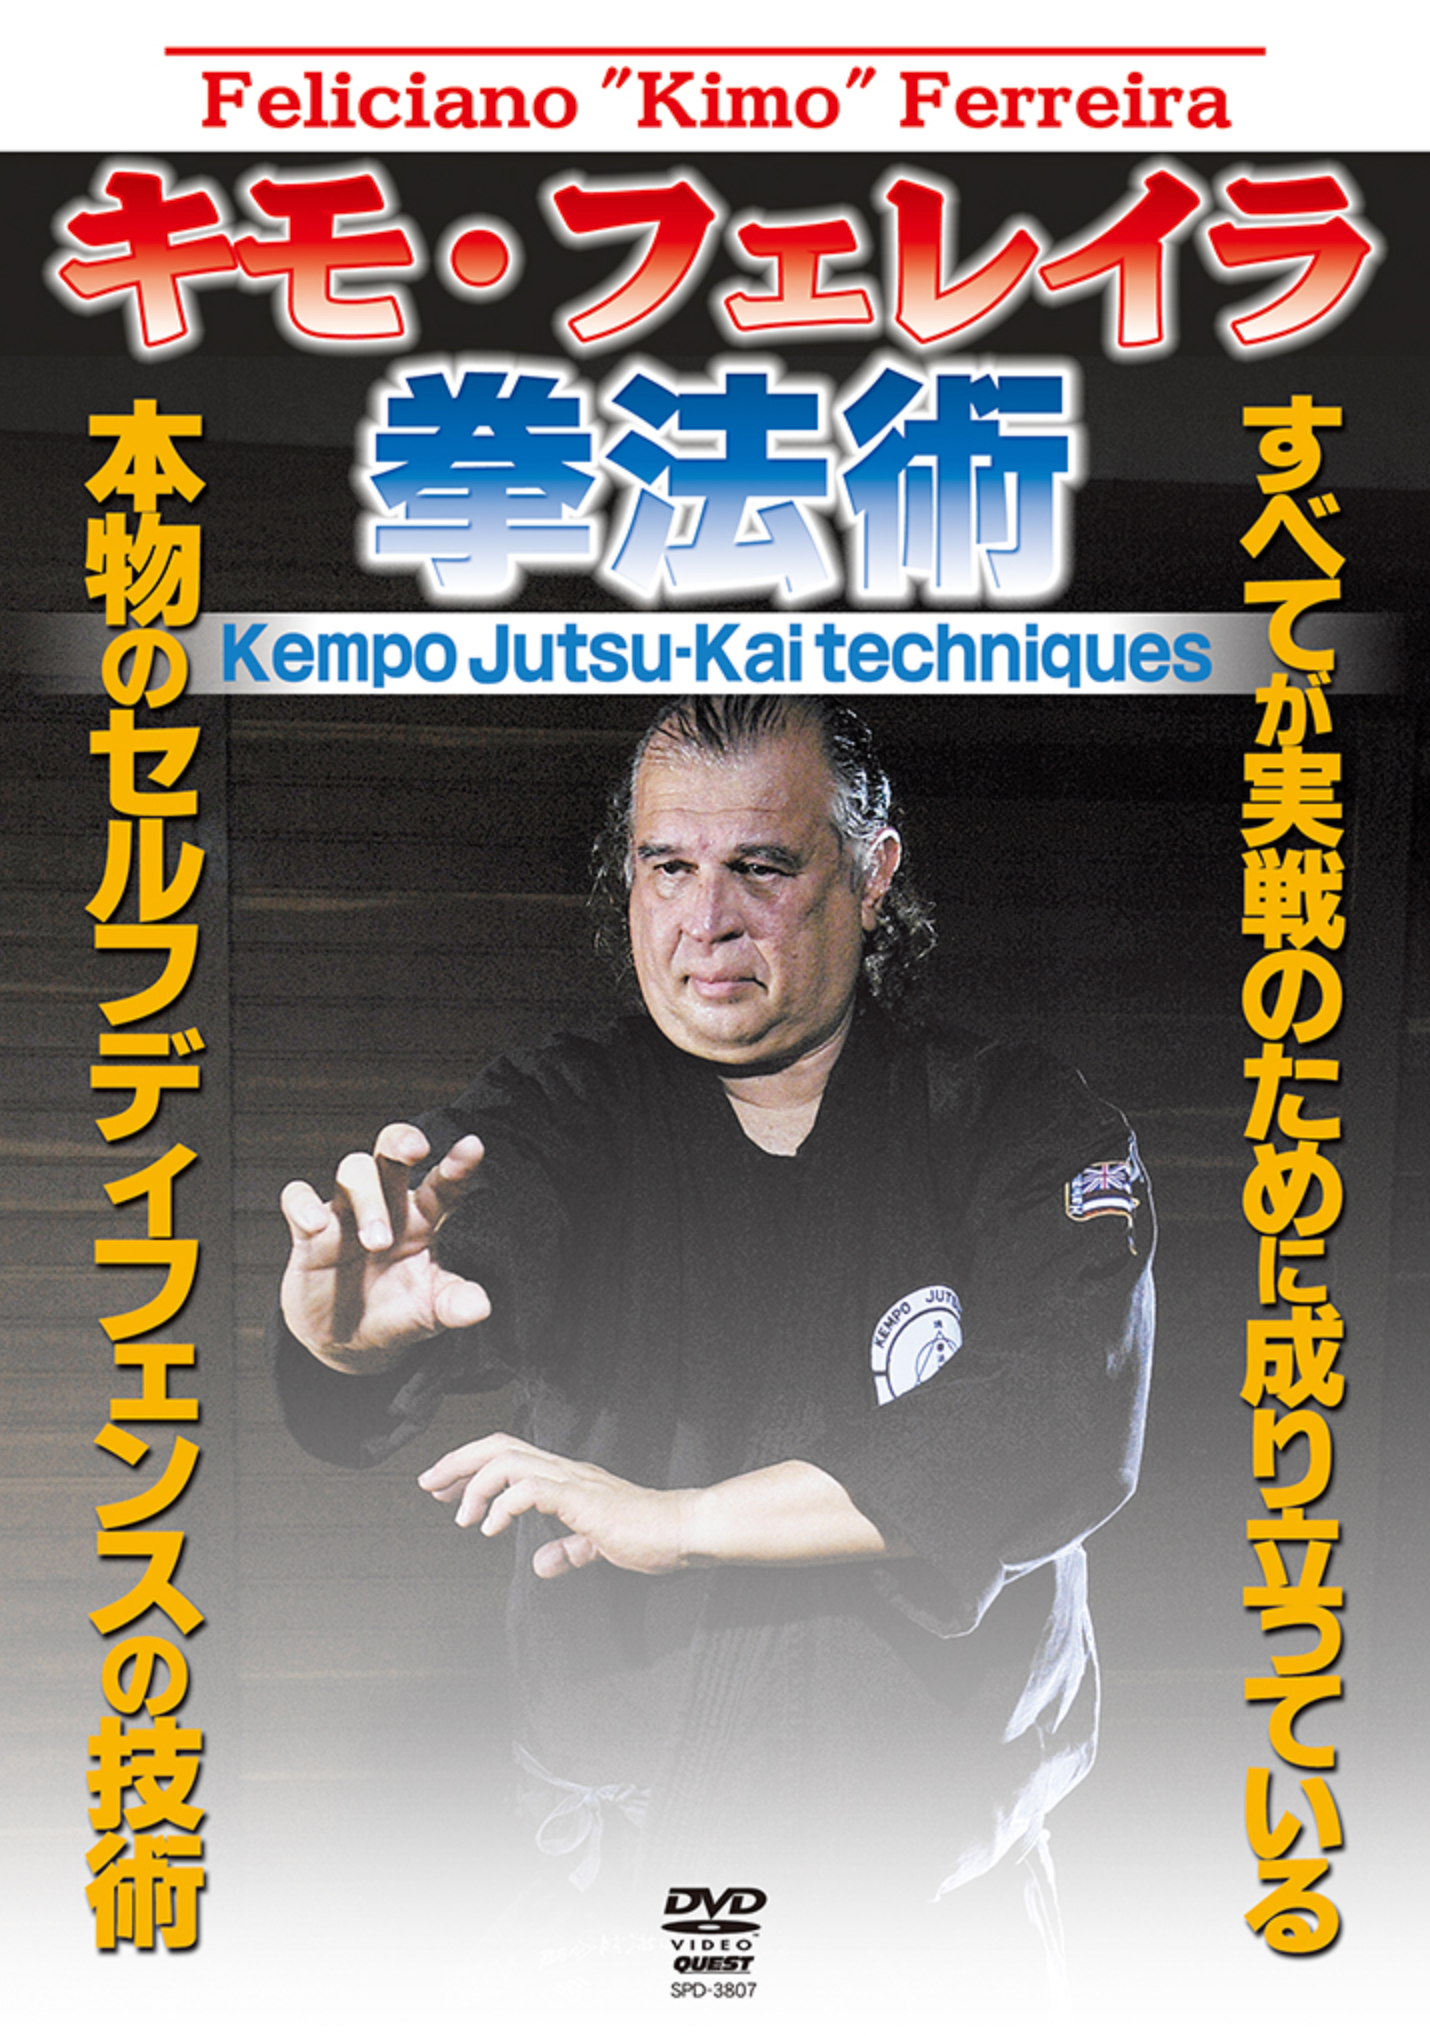 Kempo Jutsu-Kai Techniques DVD with Feliciano Kimo Ferreira - Budovideos Inc